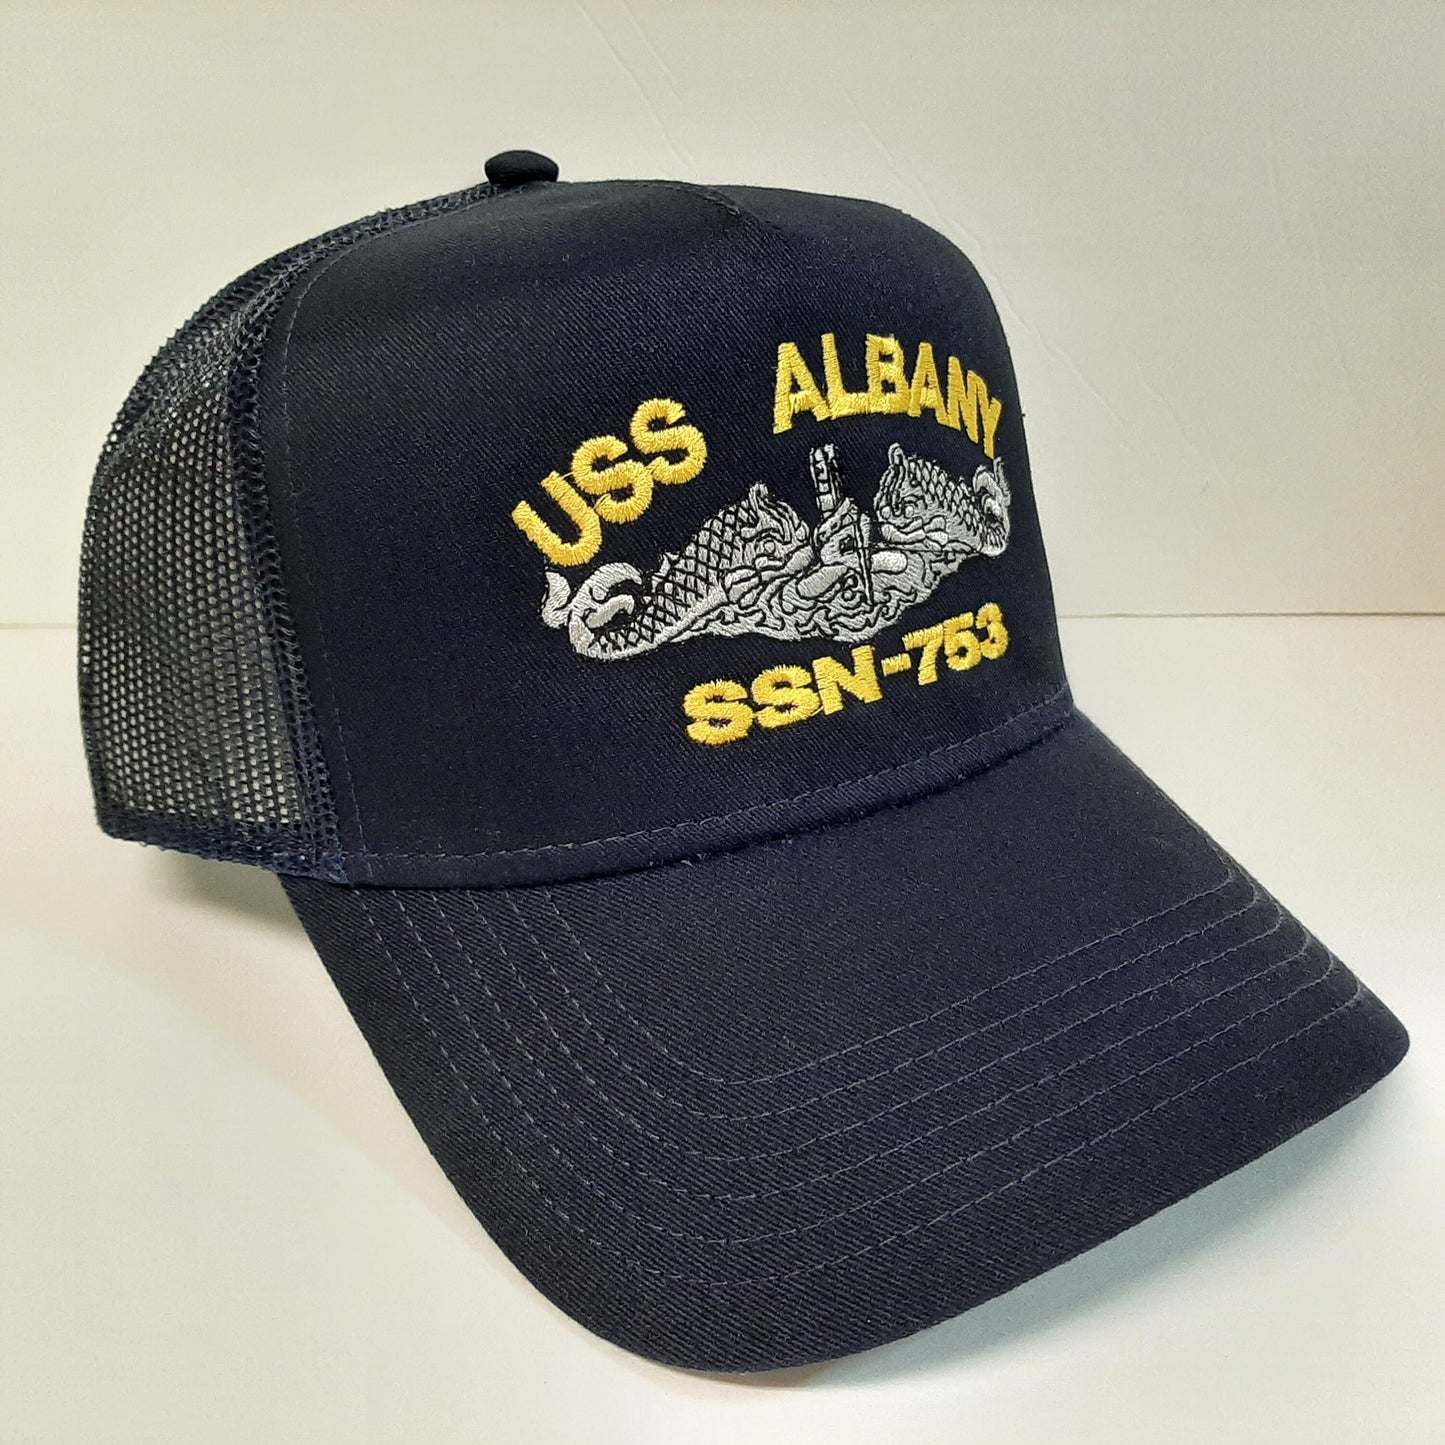 USS Albany SSN-753 Boat Baseball Cap Hat Mesh Snapback Blue Embroidered US Navy